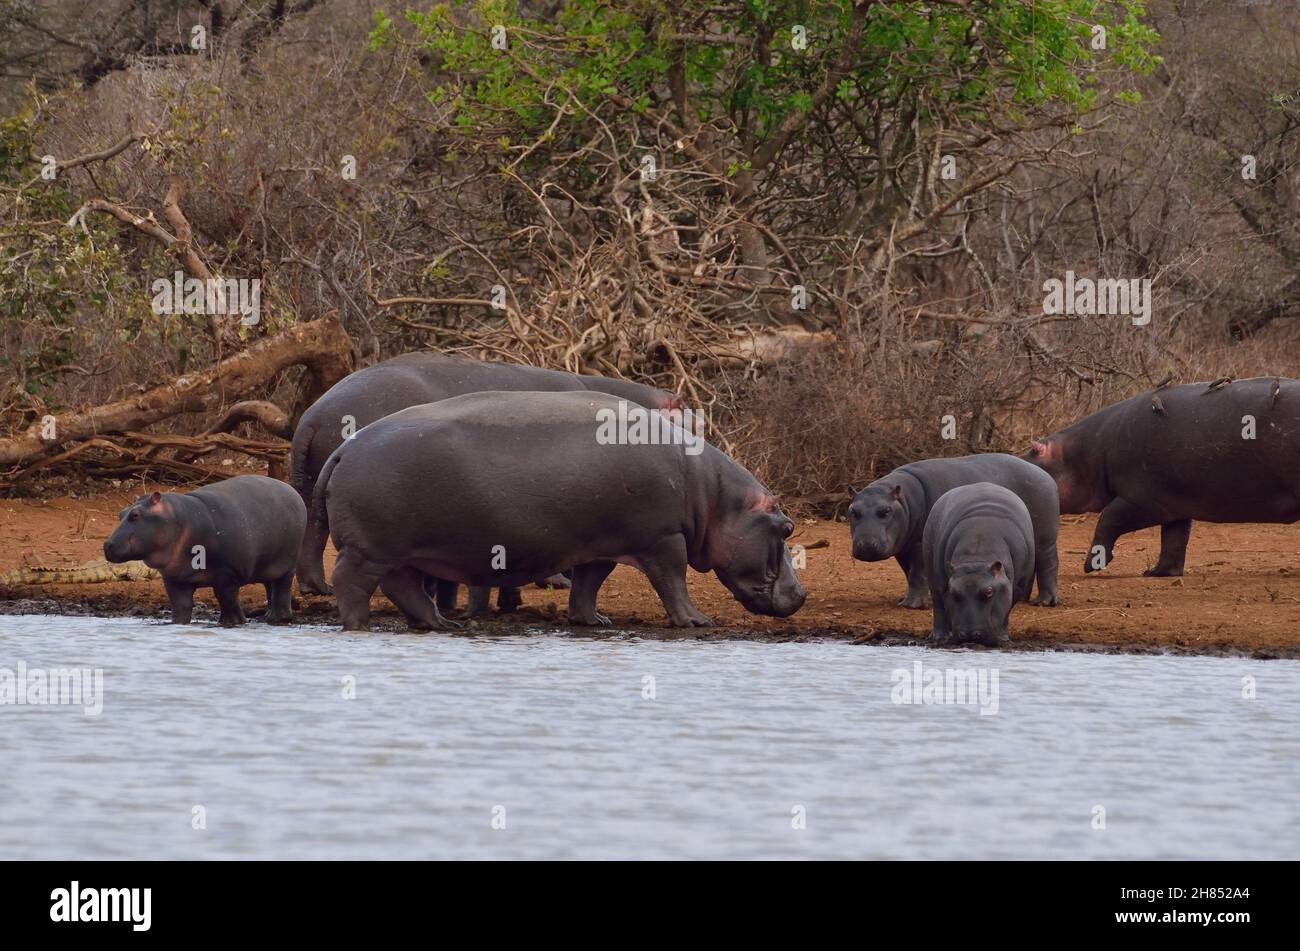 Flusspferd, hippo, common hippopotamus, Hippopotamus amphibius, Kruger-Nationalpark, Südafrika, Kruger National Park, Republic of South Africa Stock Photo